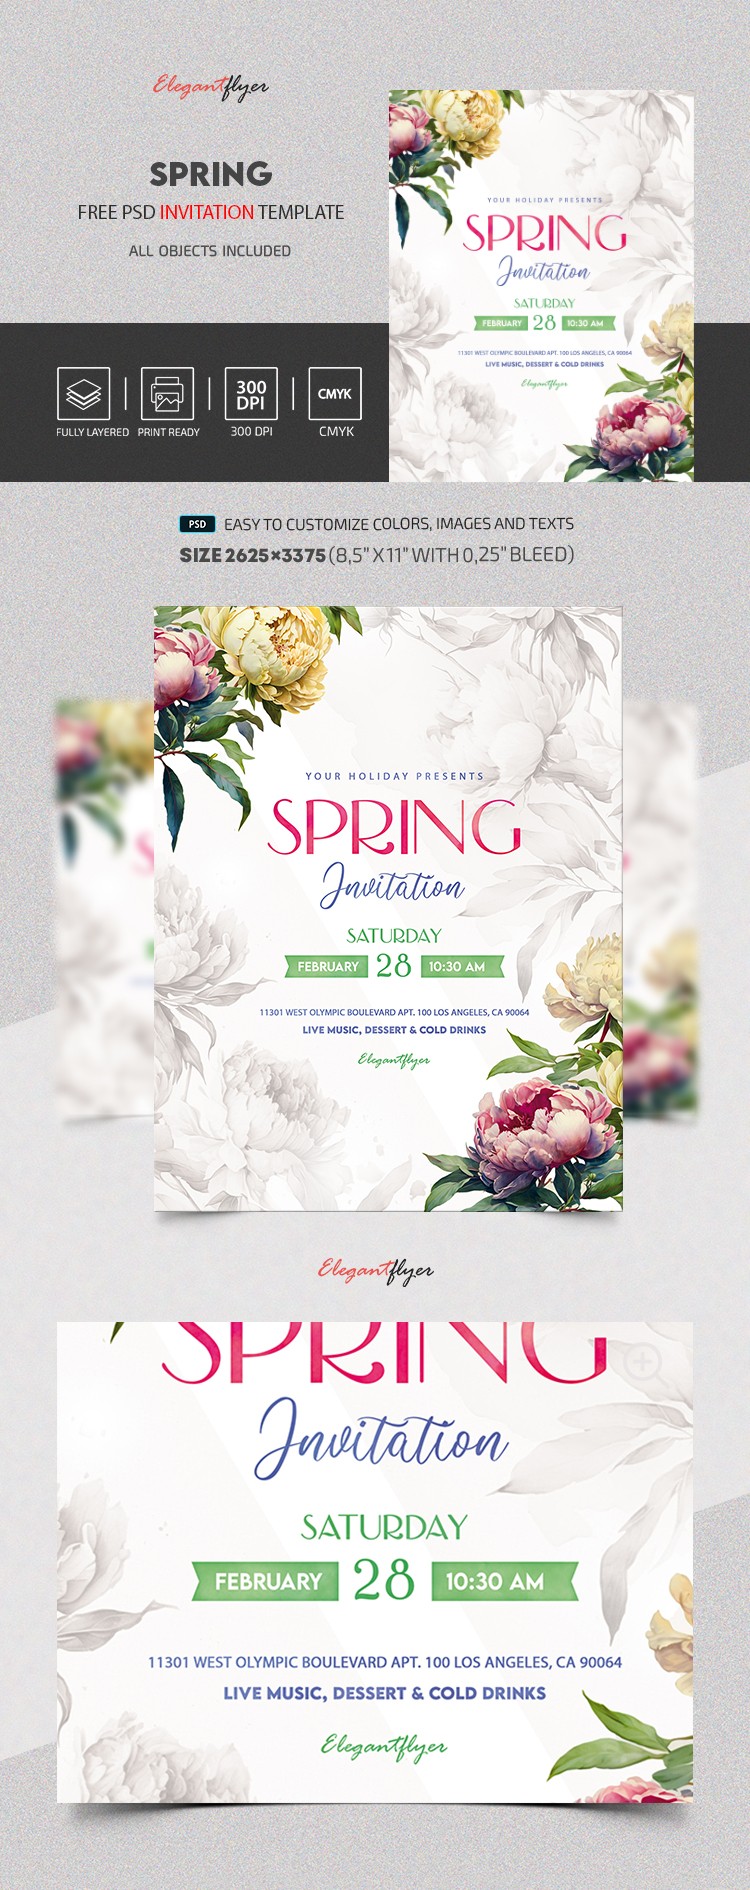 Free Spring Invitation PSD Template by ElegantFlyer